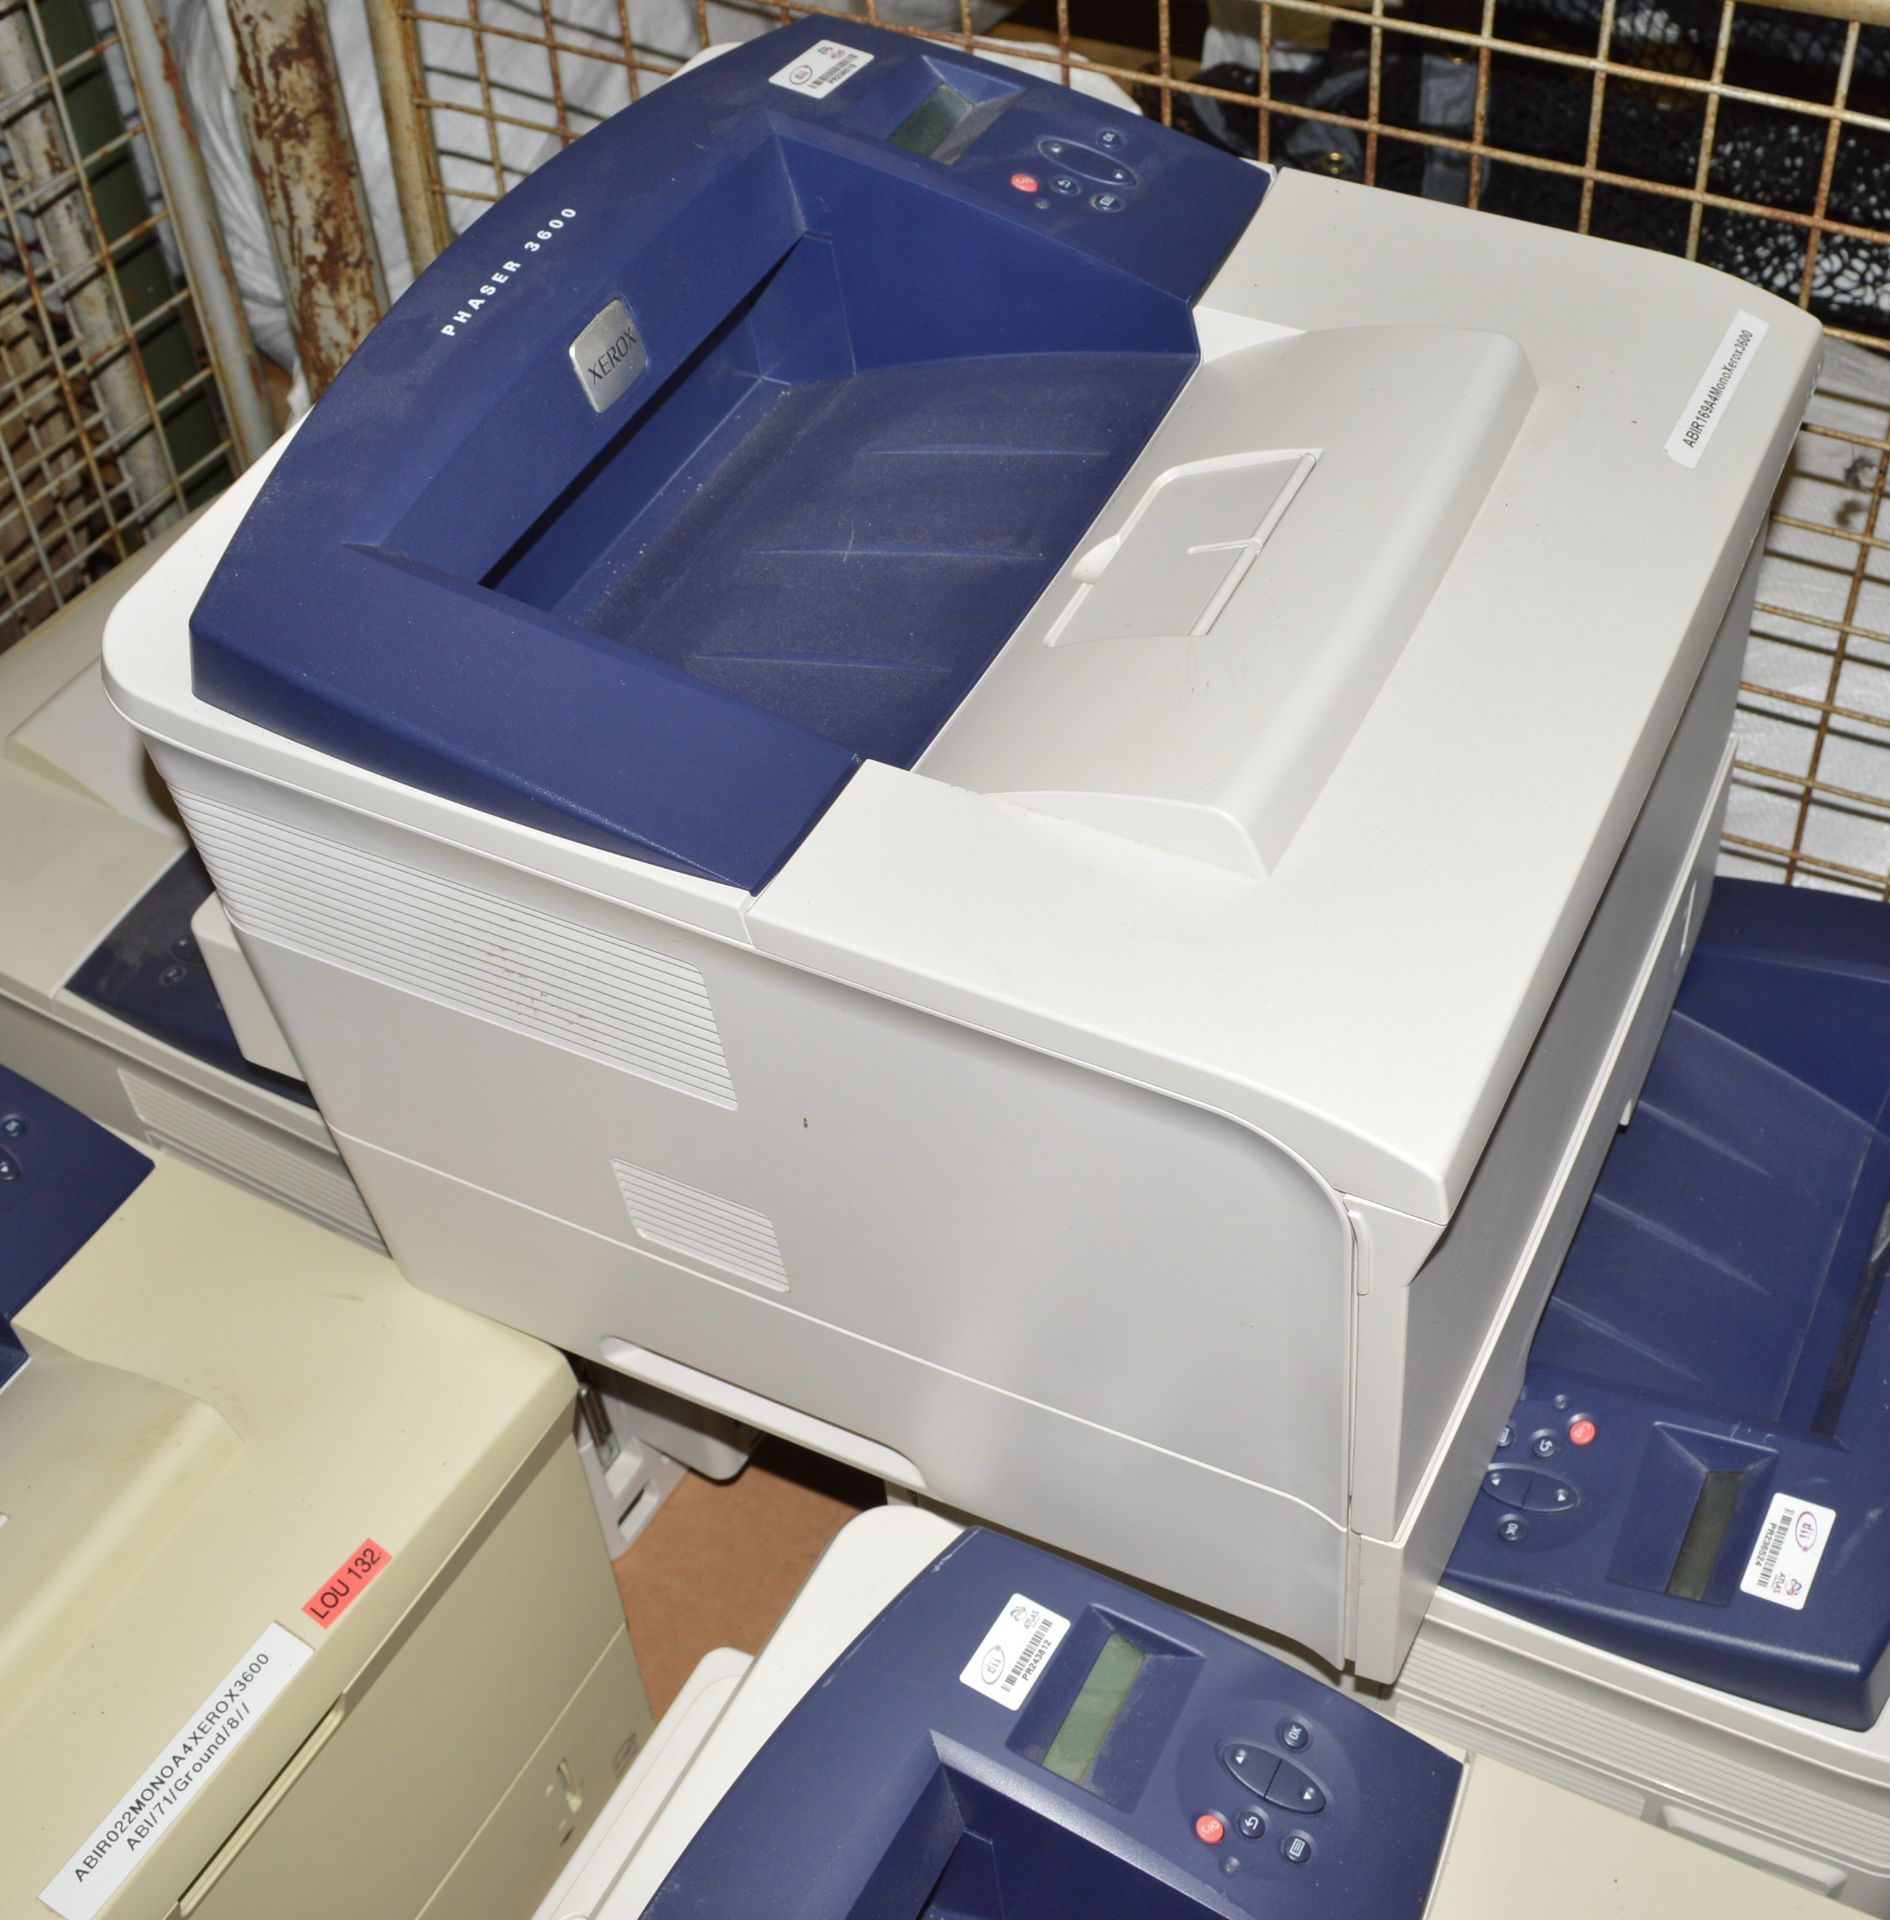 5x Xerox Phaser 3600 Printers